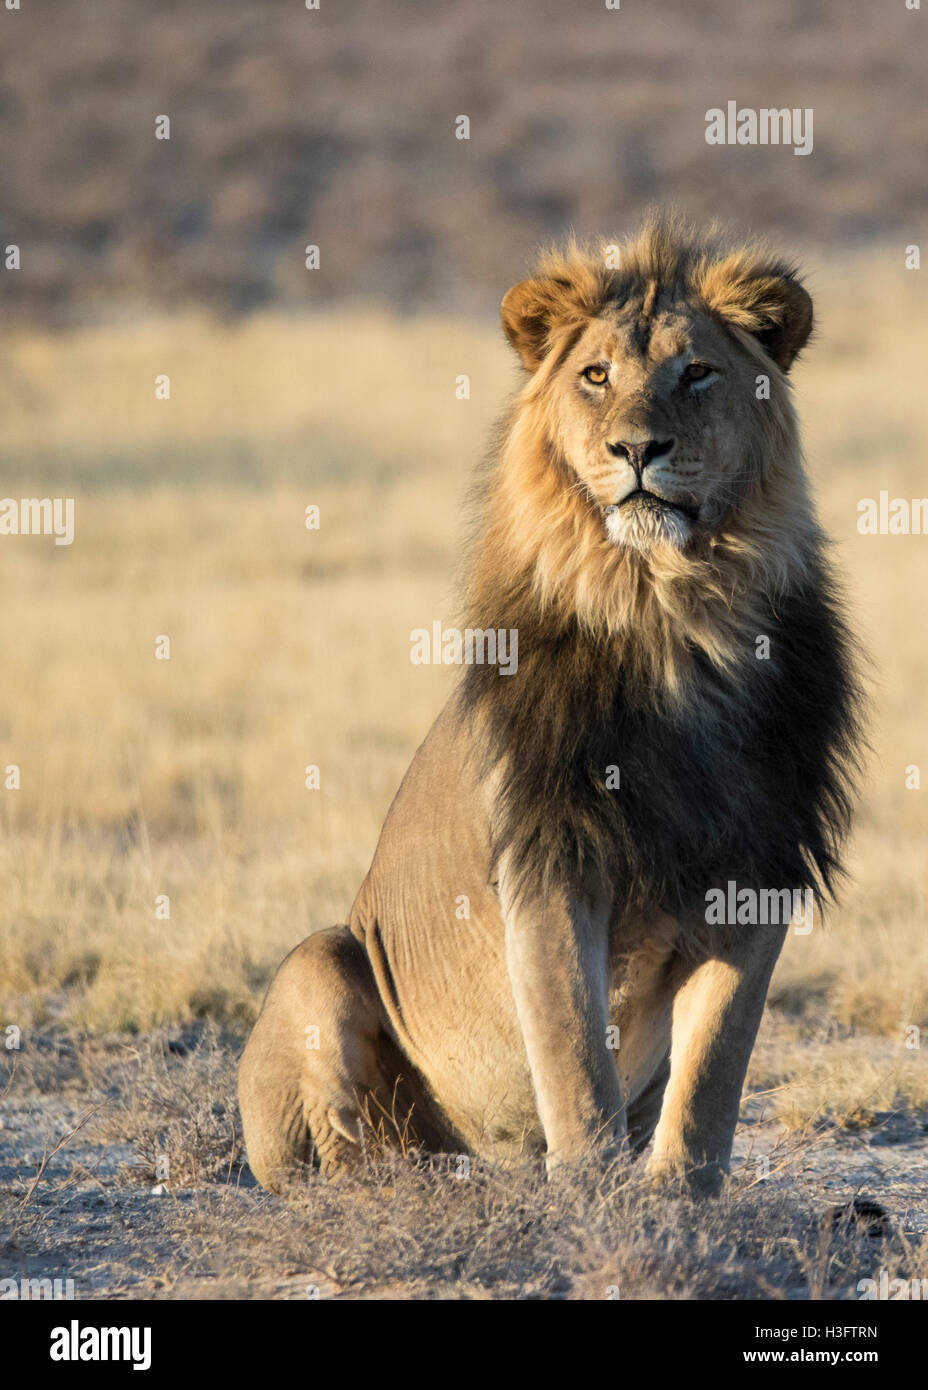 Lion Sitting Upright